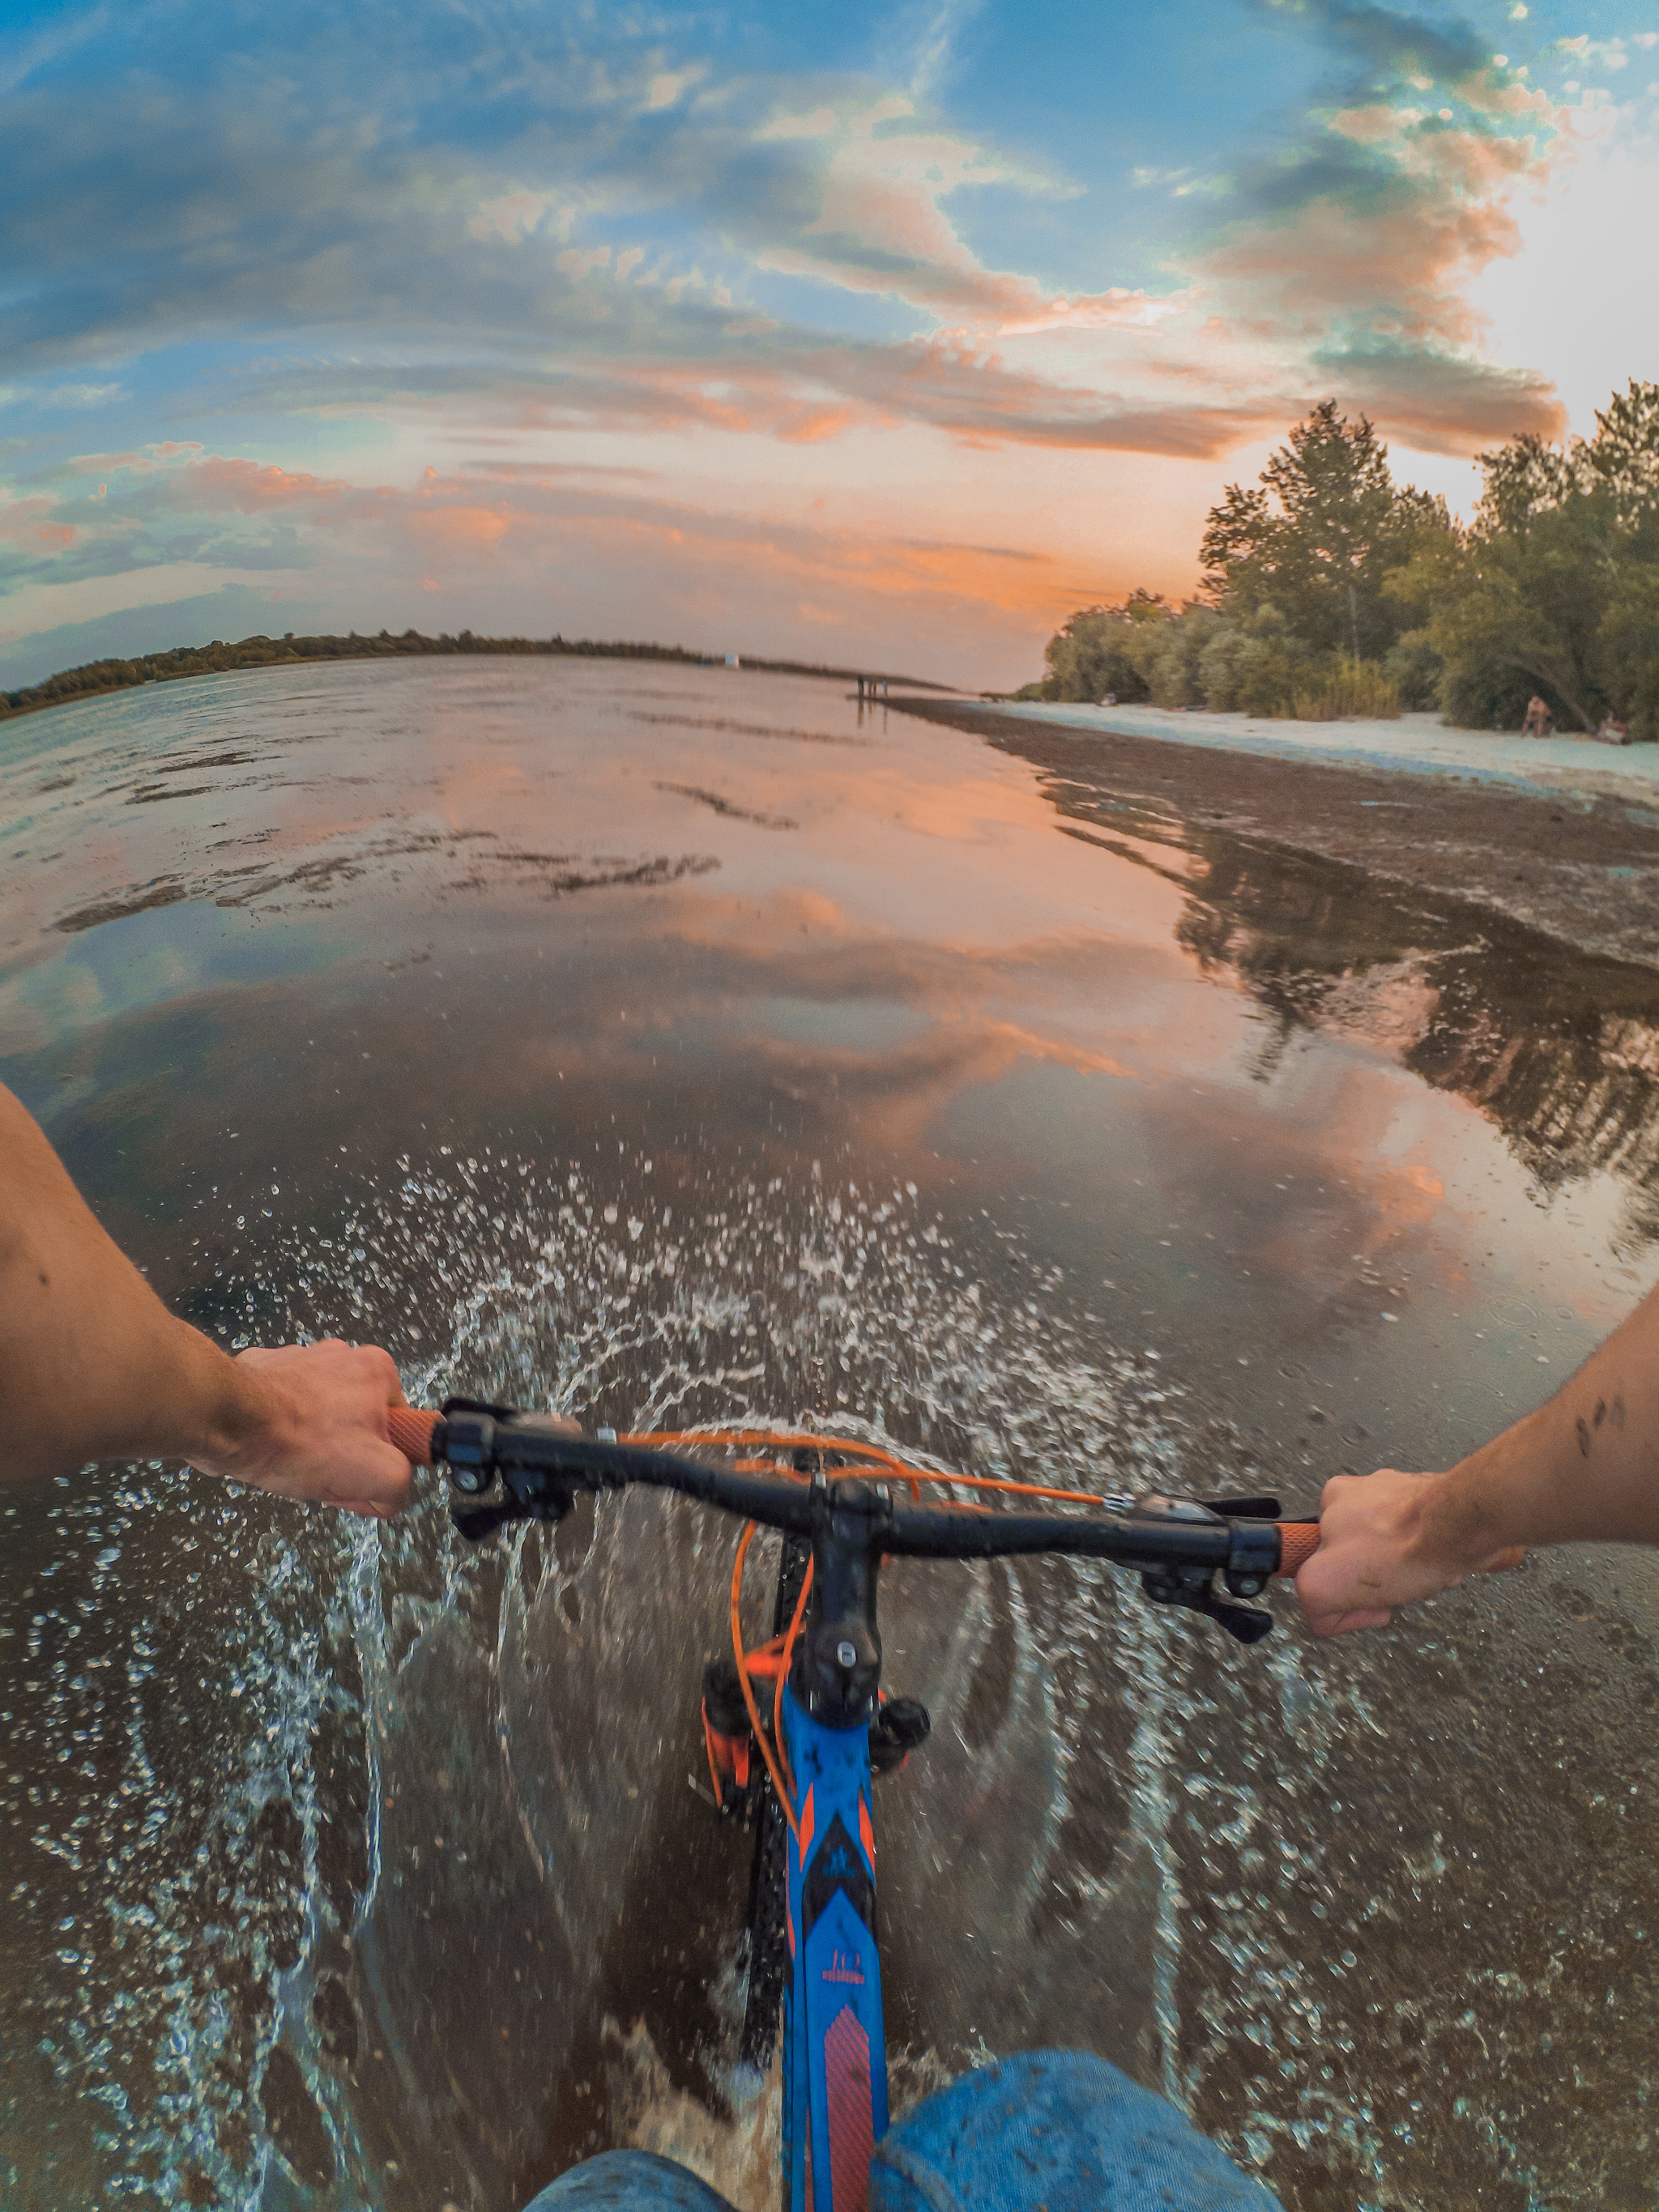 River bike. Велосипед у реки. Река велосипед зонт. Велосипед из речки. Отражение велосипедиста в реке.